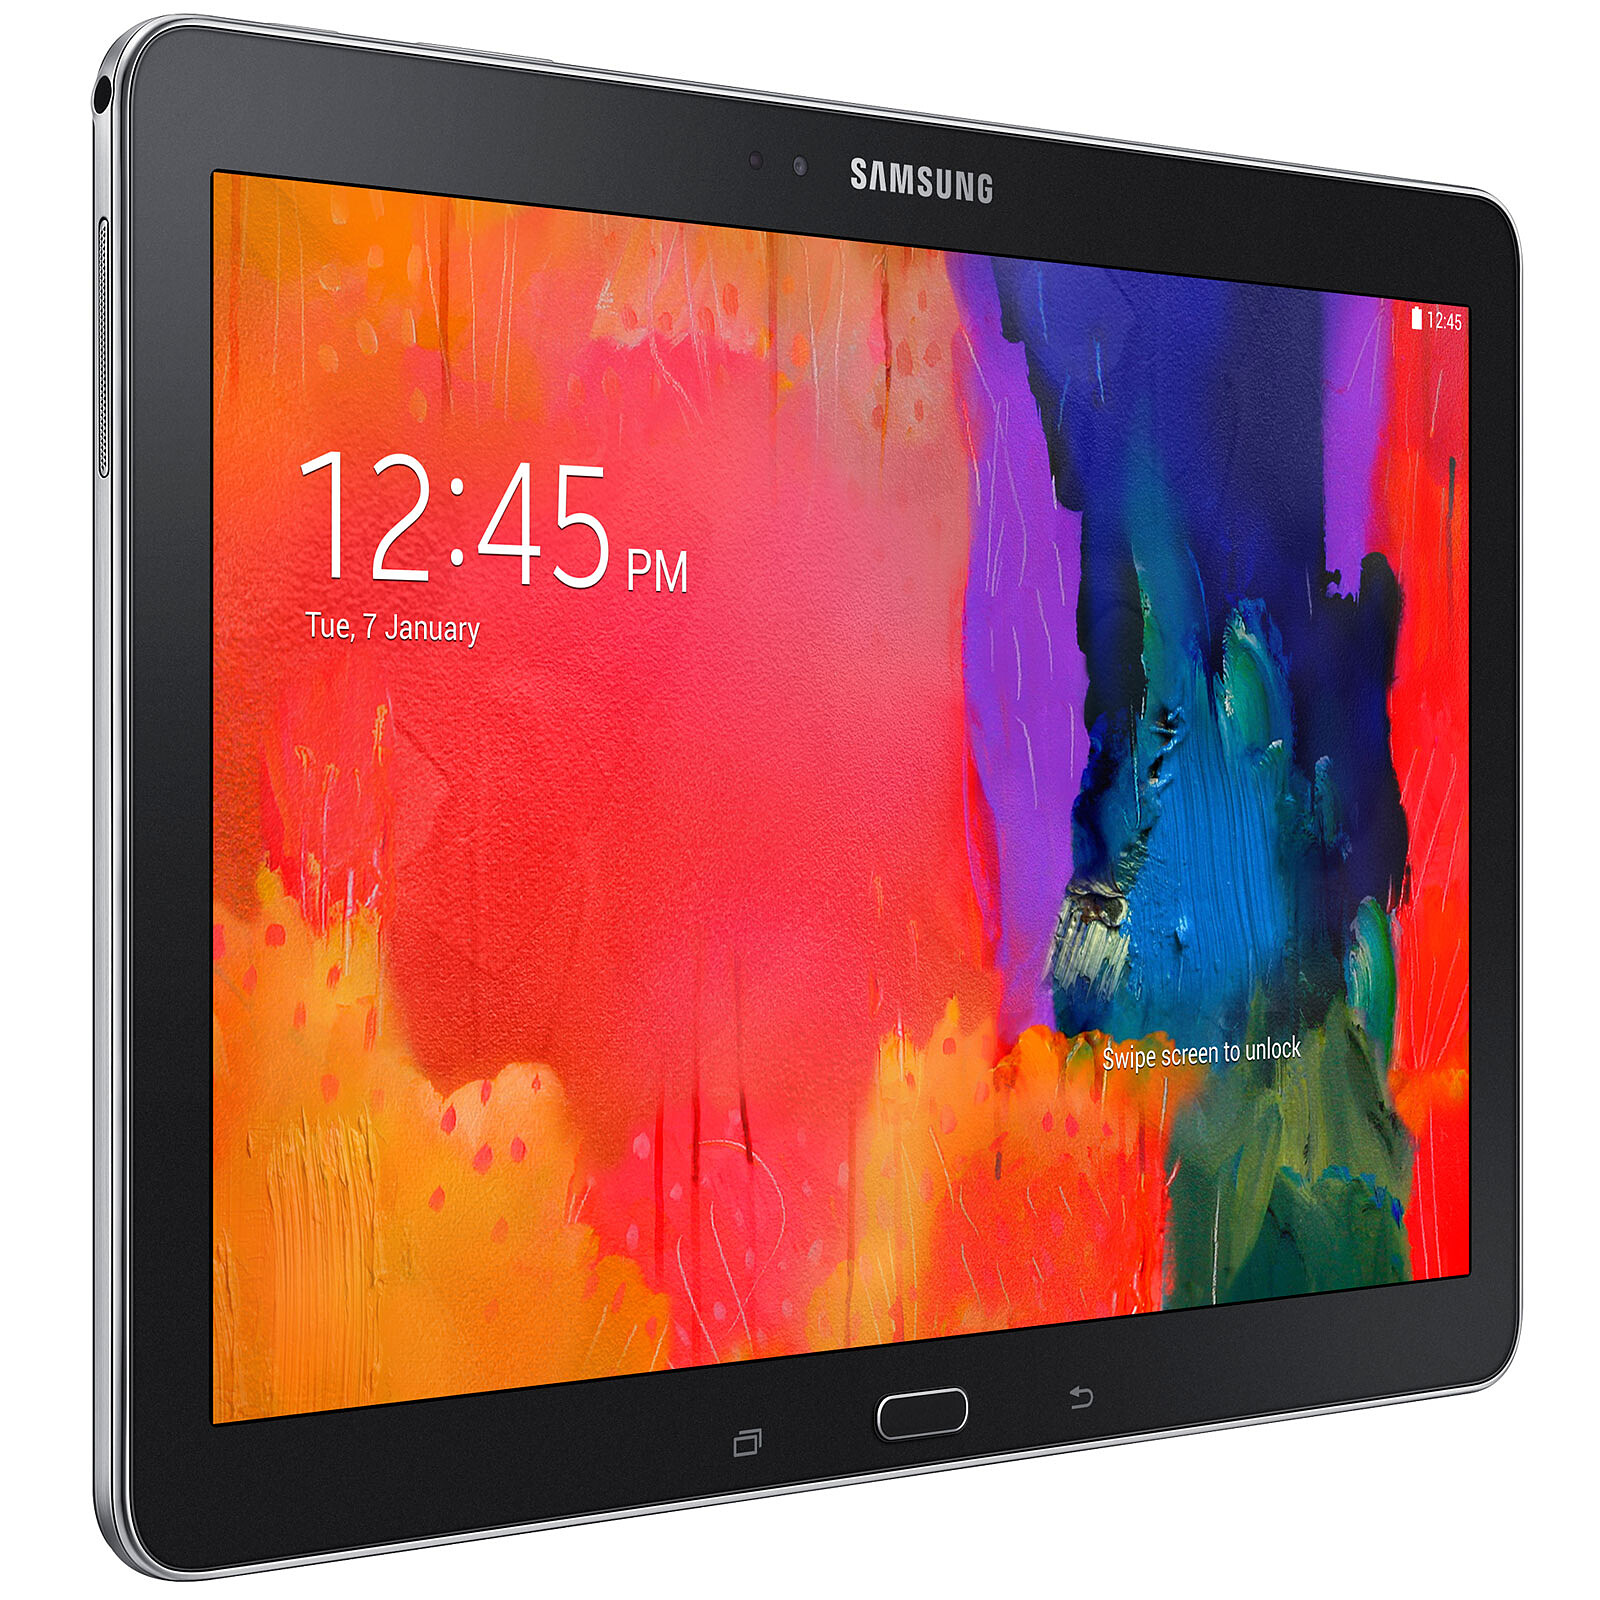 Etui avec Clavier Azerty Bluetooth pour Tablette Samsung Galaxy Tab S 8.4  T700/7